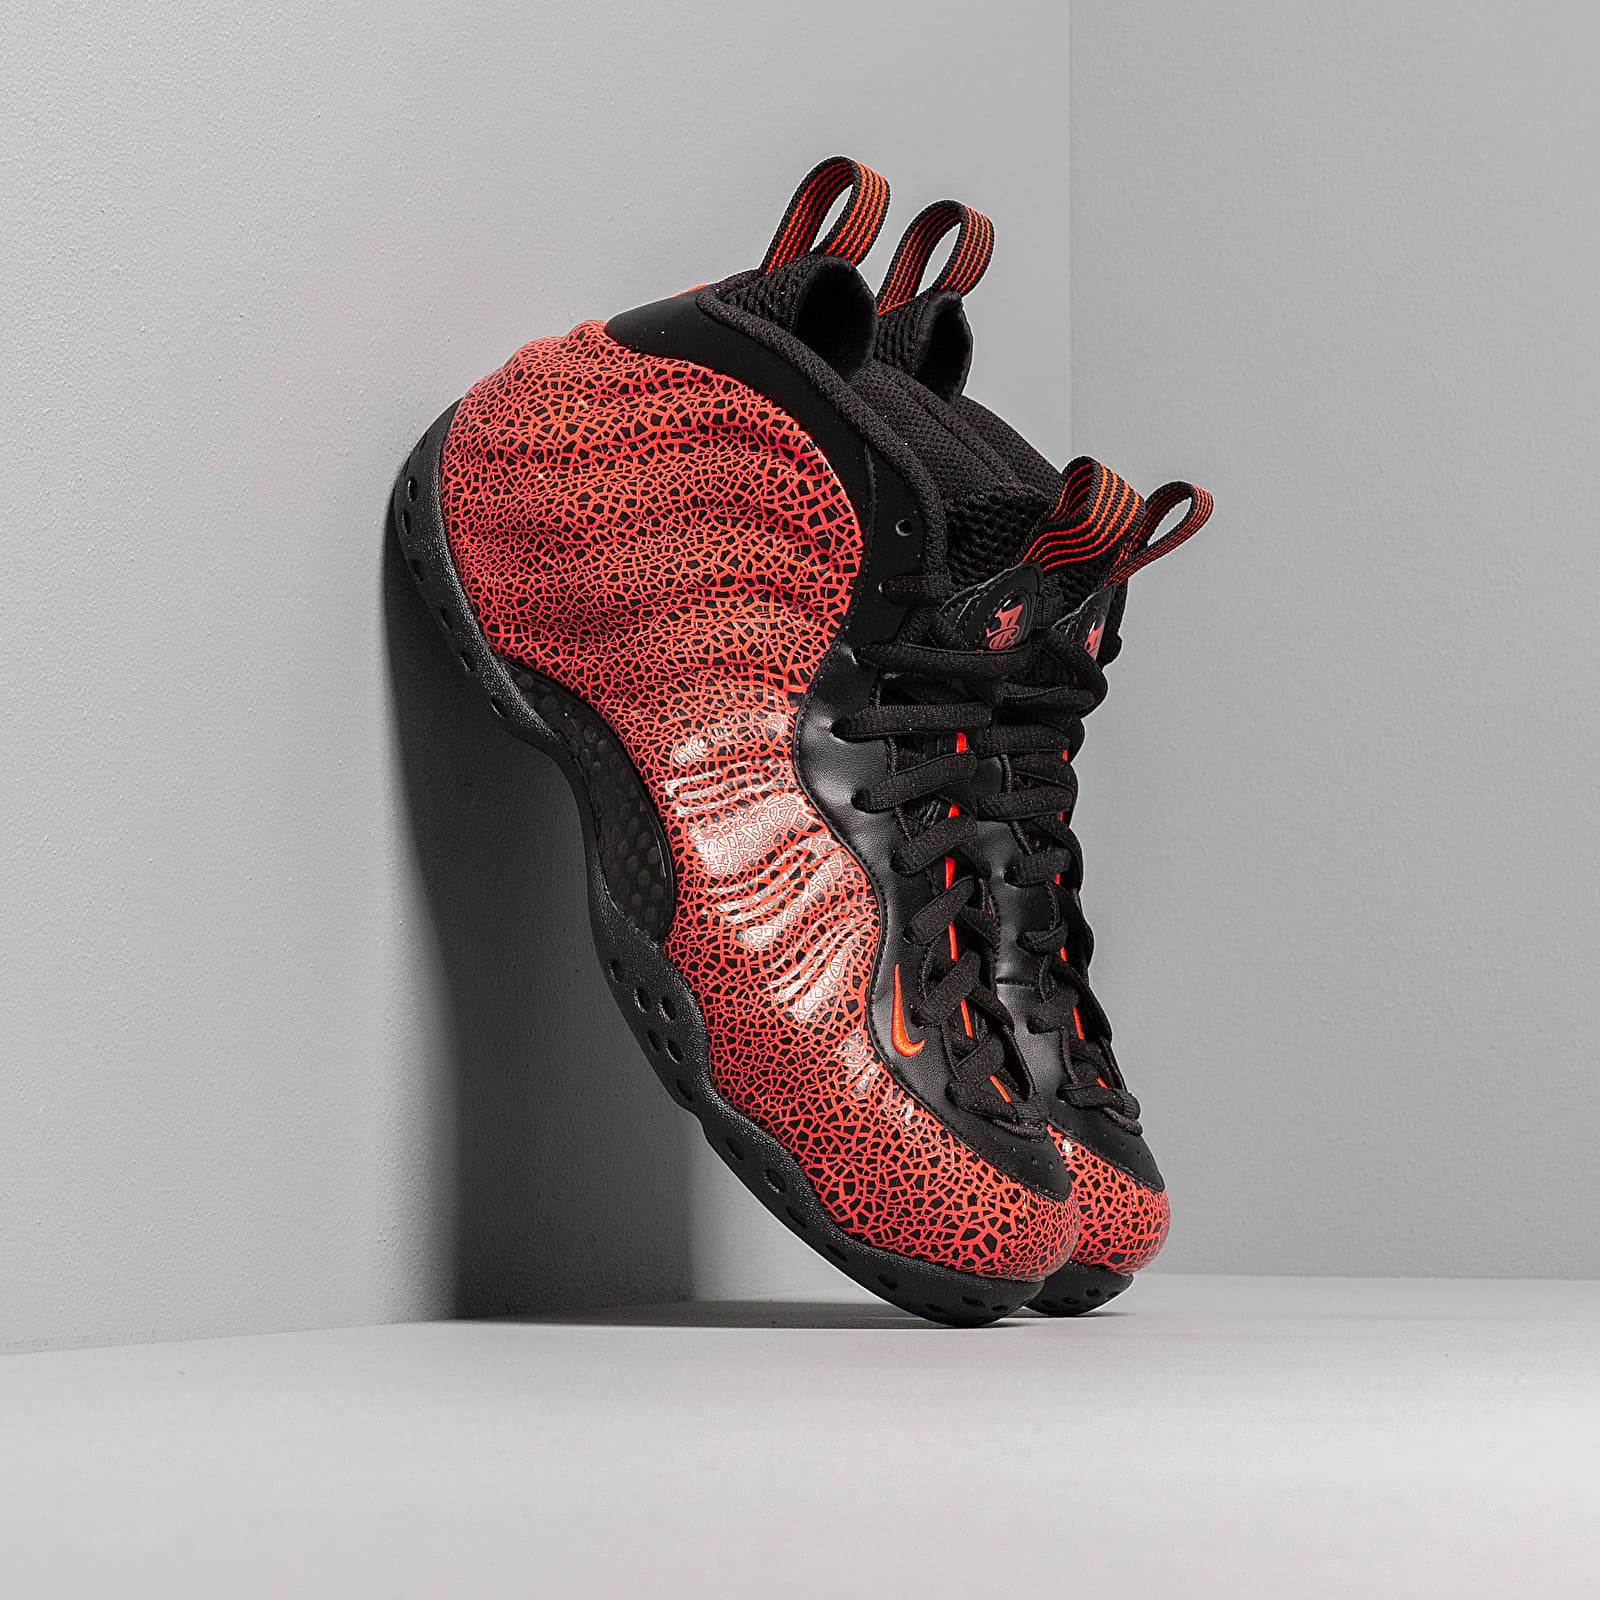 Men's shoes Nike Air Foamposite One Black/ Bright Crimson-Total Crimson